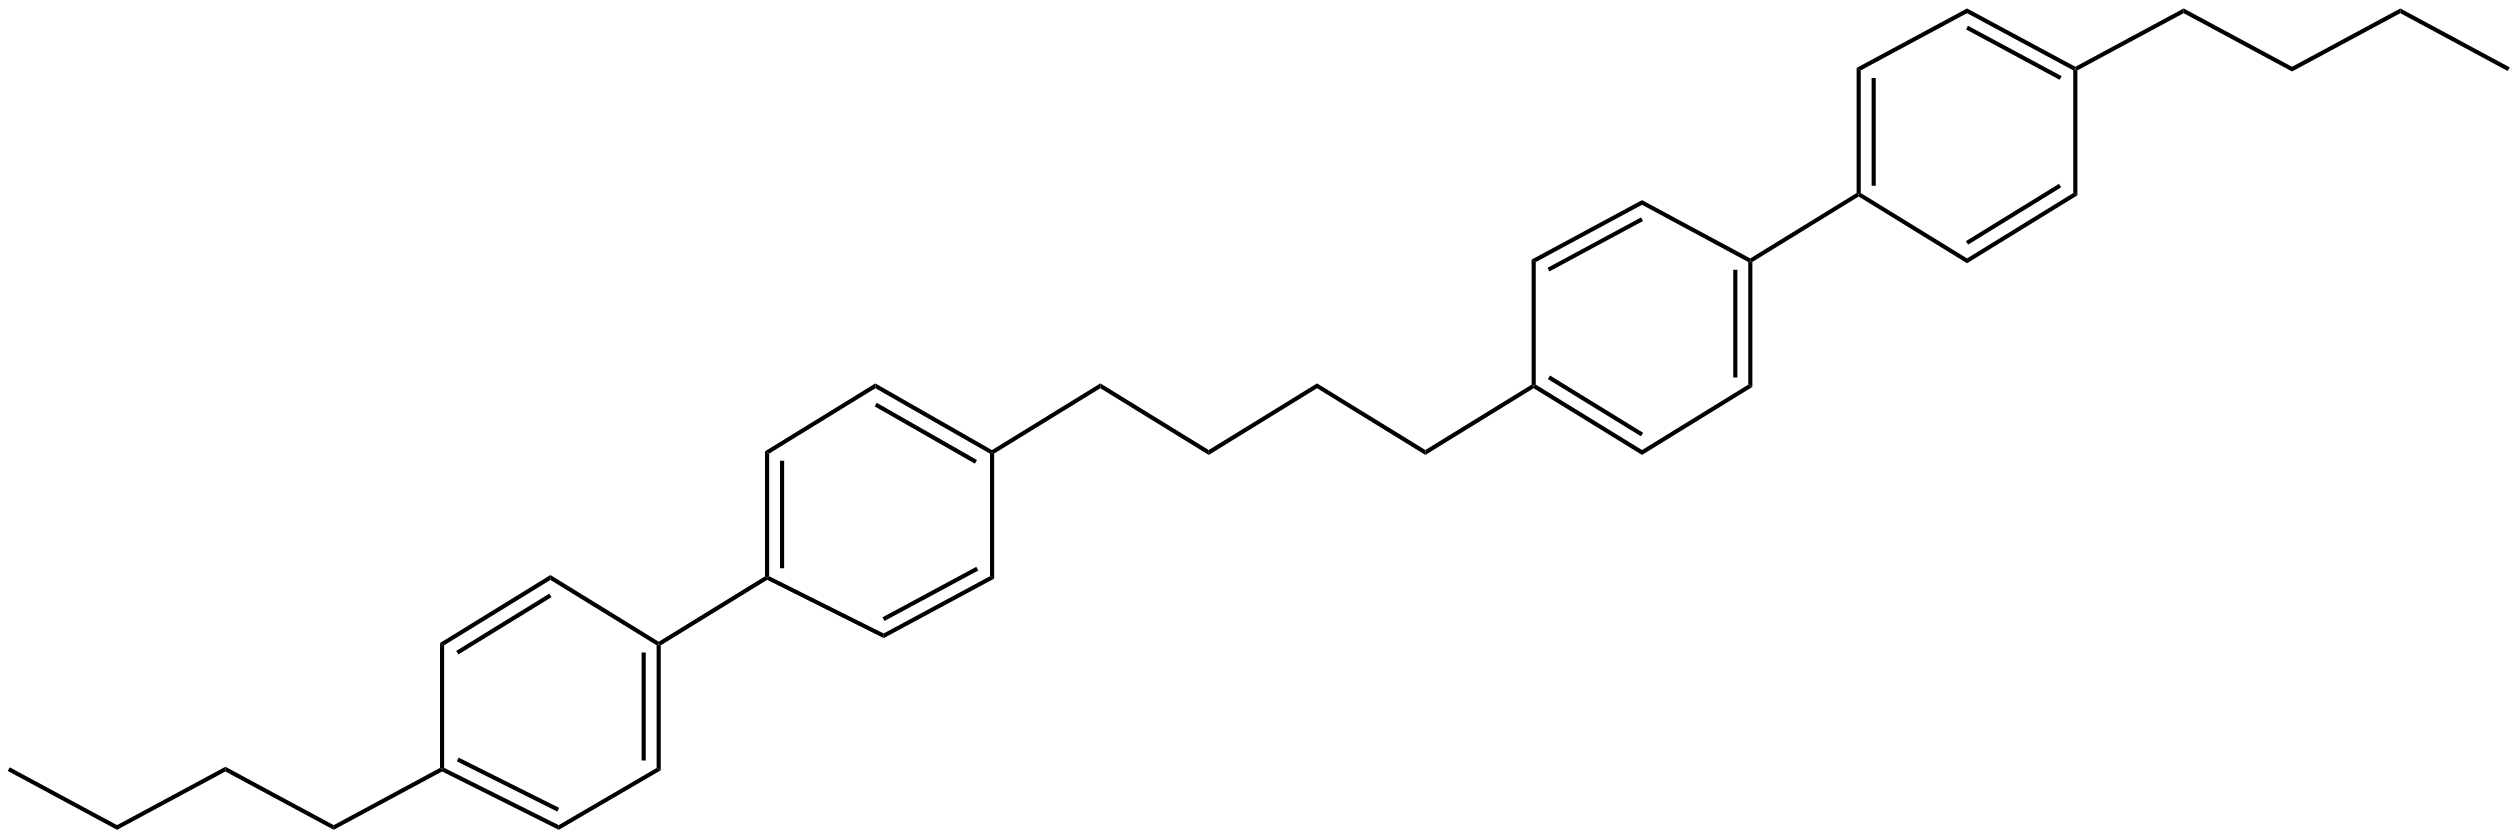 Image of 1,4-bis[4-(4'-butylbiphenyl)]butane